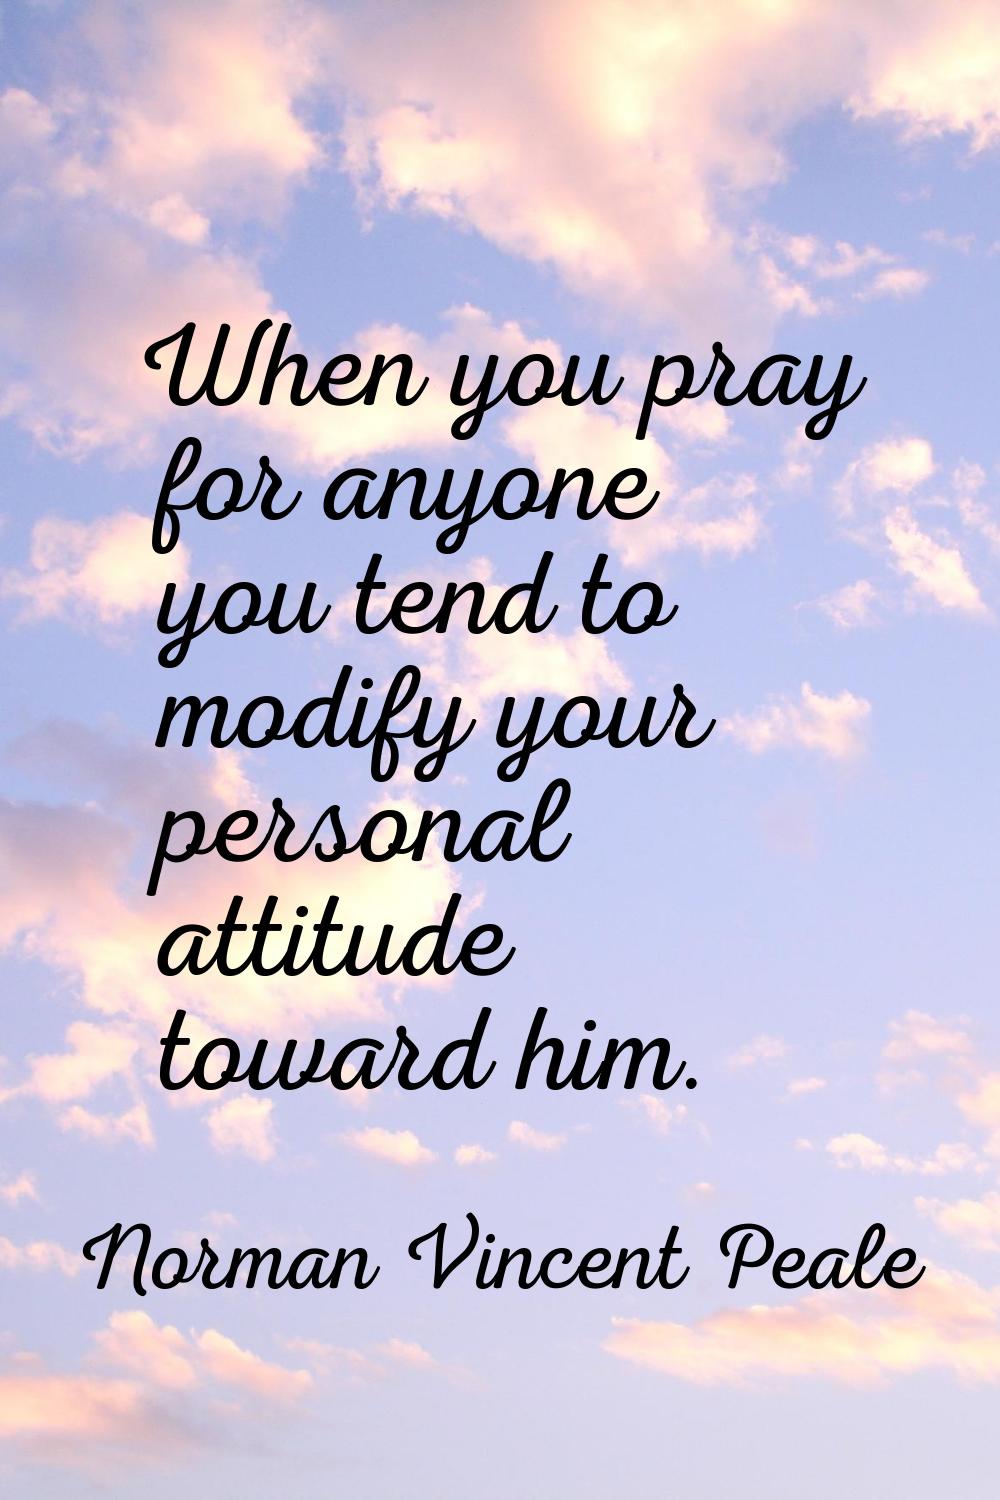 When you pray for anyone you tend to modify your personal attitude toward him.